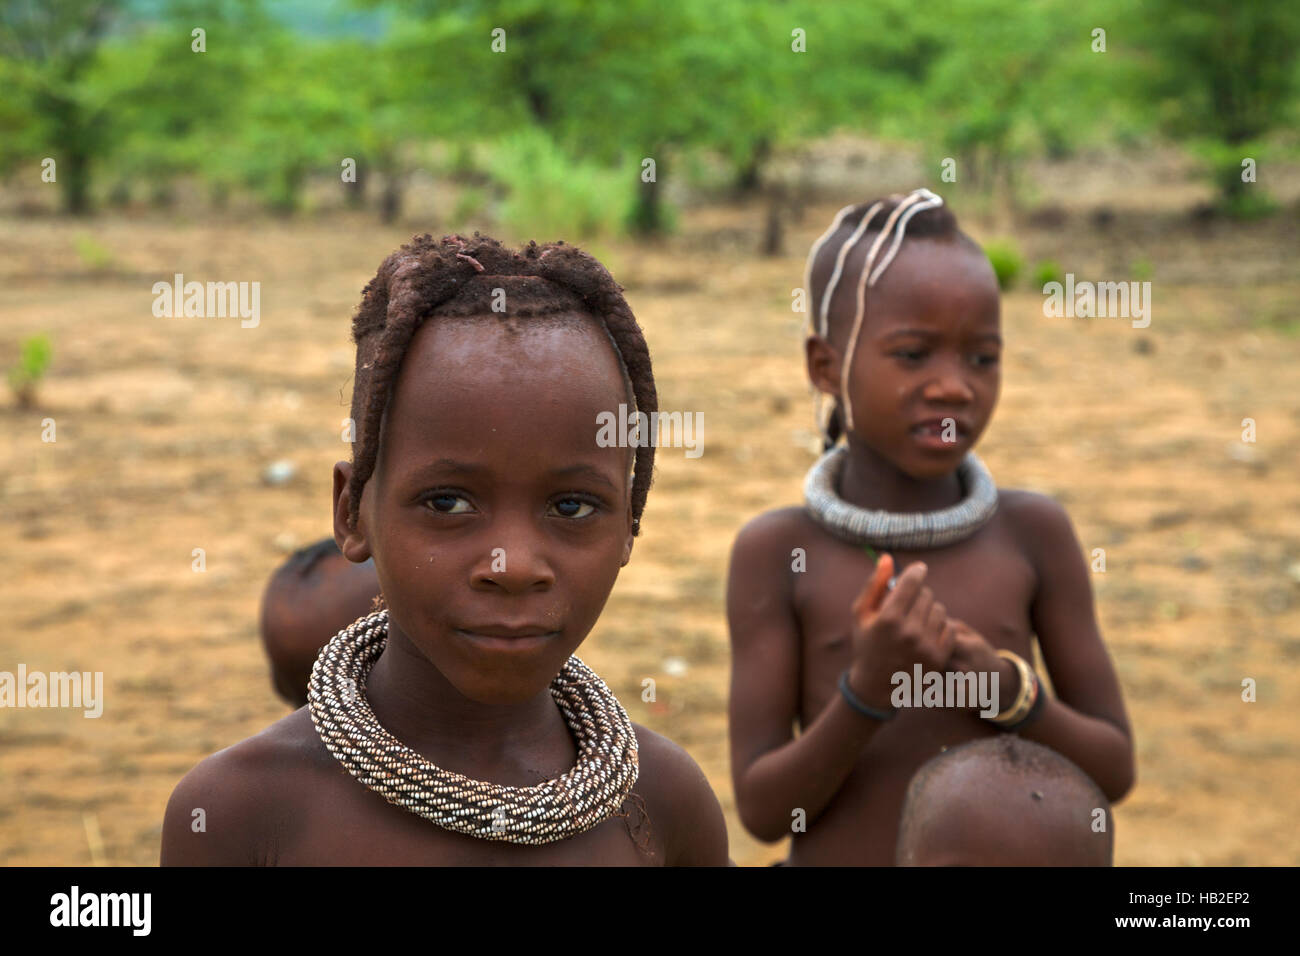 EPUPA FALLS, Namibia, 8 gennaio: Gruppo di Himba bambini in posa davanti alla macchina fotografica vicino Opuwo. Kunene - Namibia 2010 Foto Stock